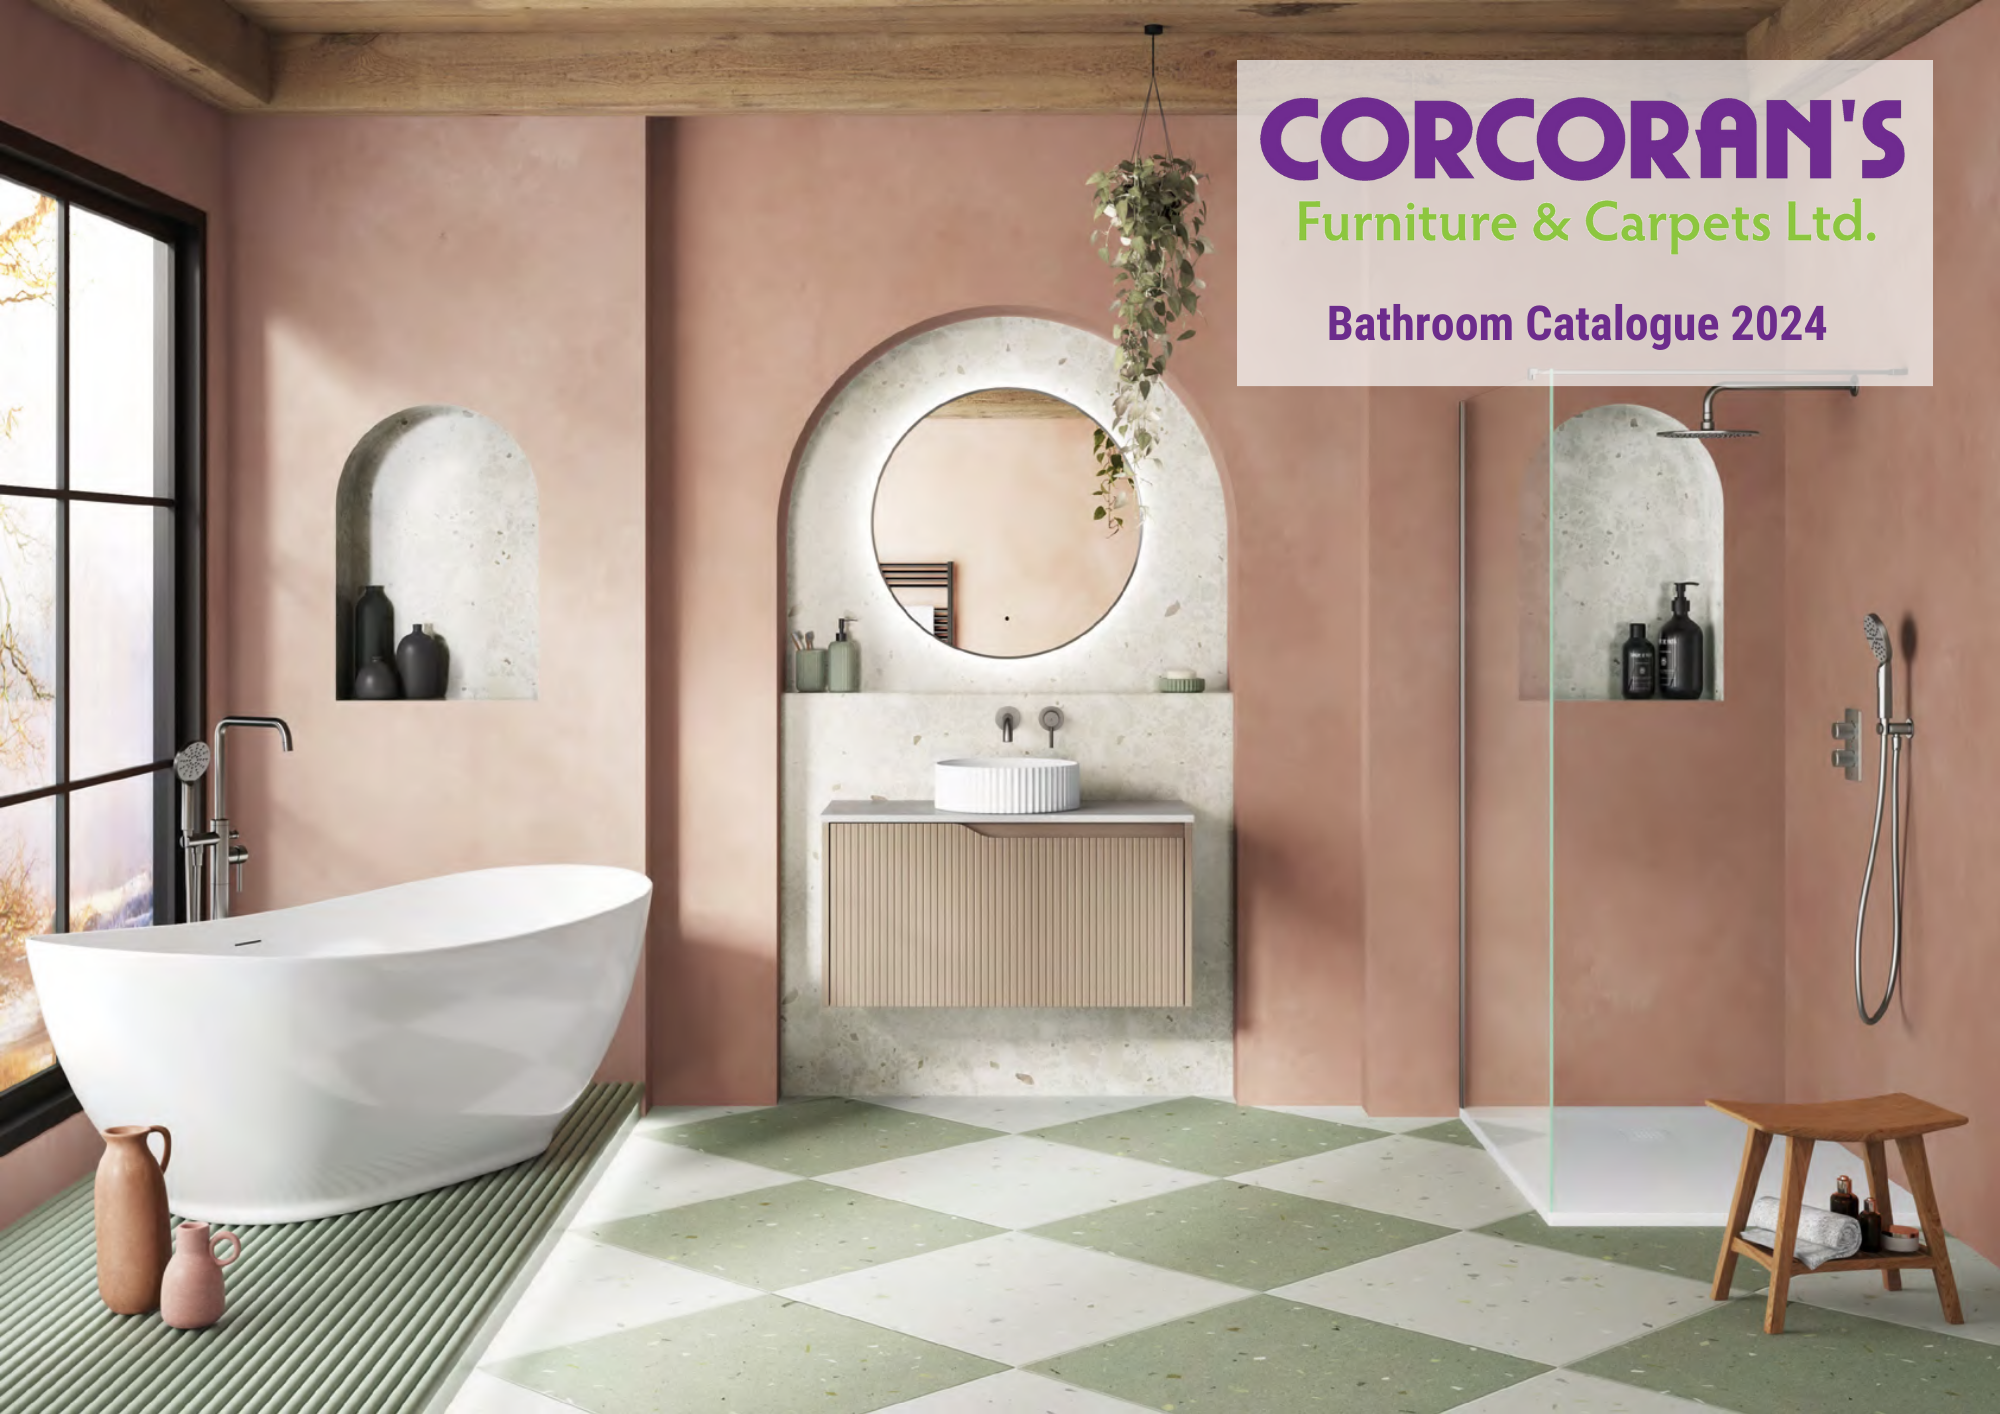 Corcorans Bathroom Catalogue 2024